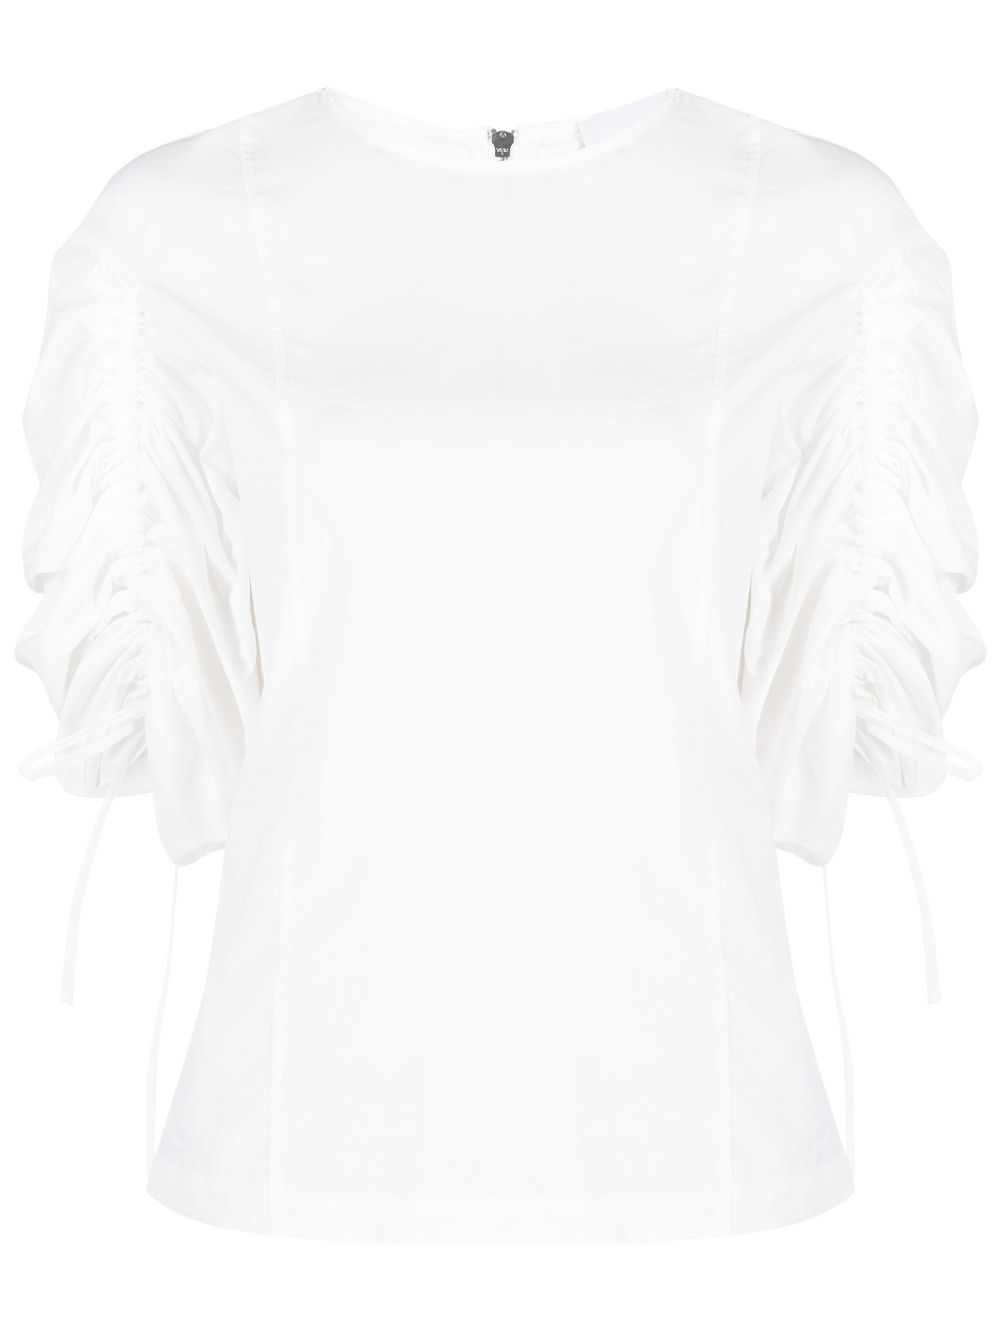 Erika Cavallini Semi Couture Top White